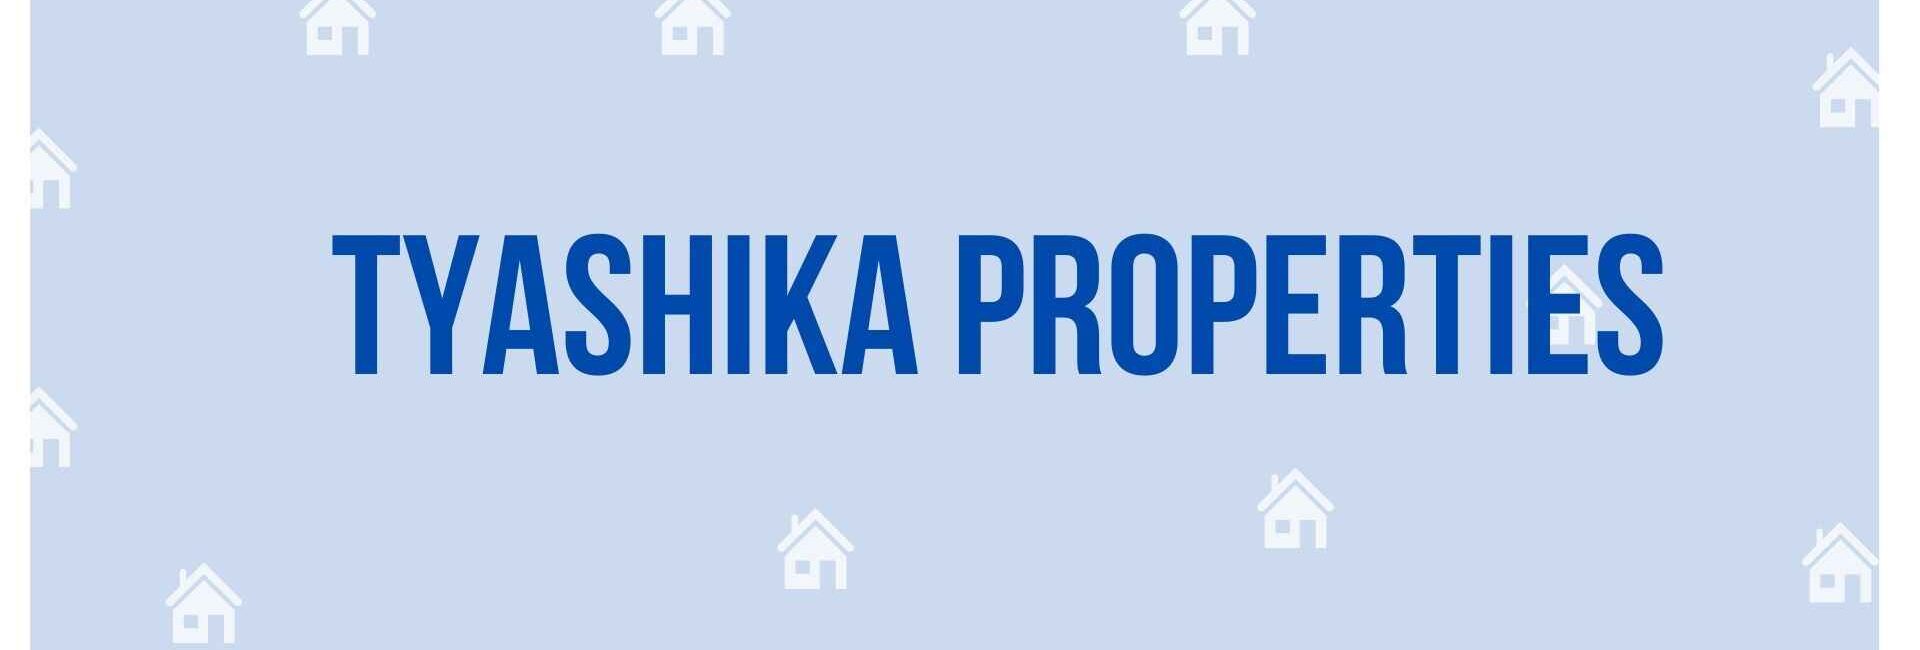 Tyashika Properties - Property Dealer in Noida